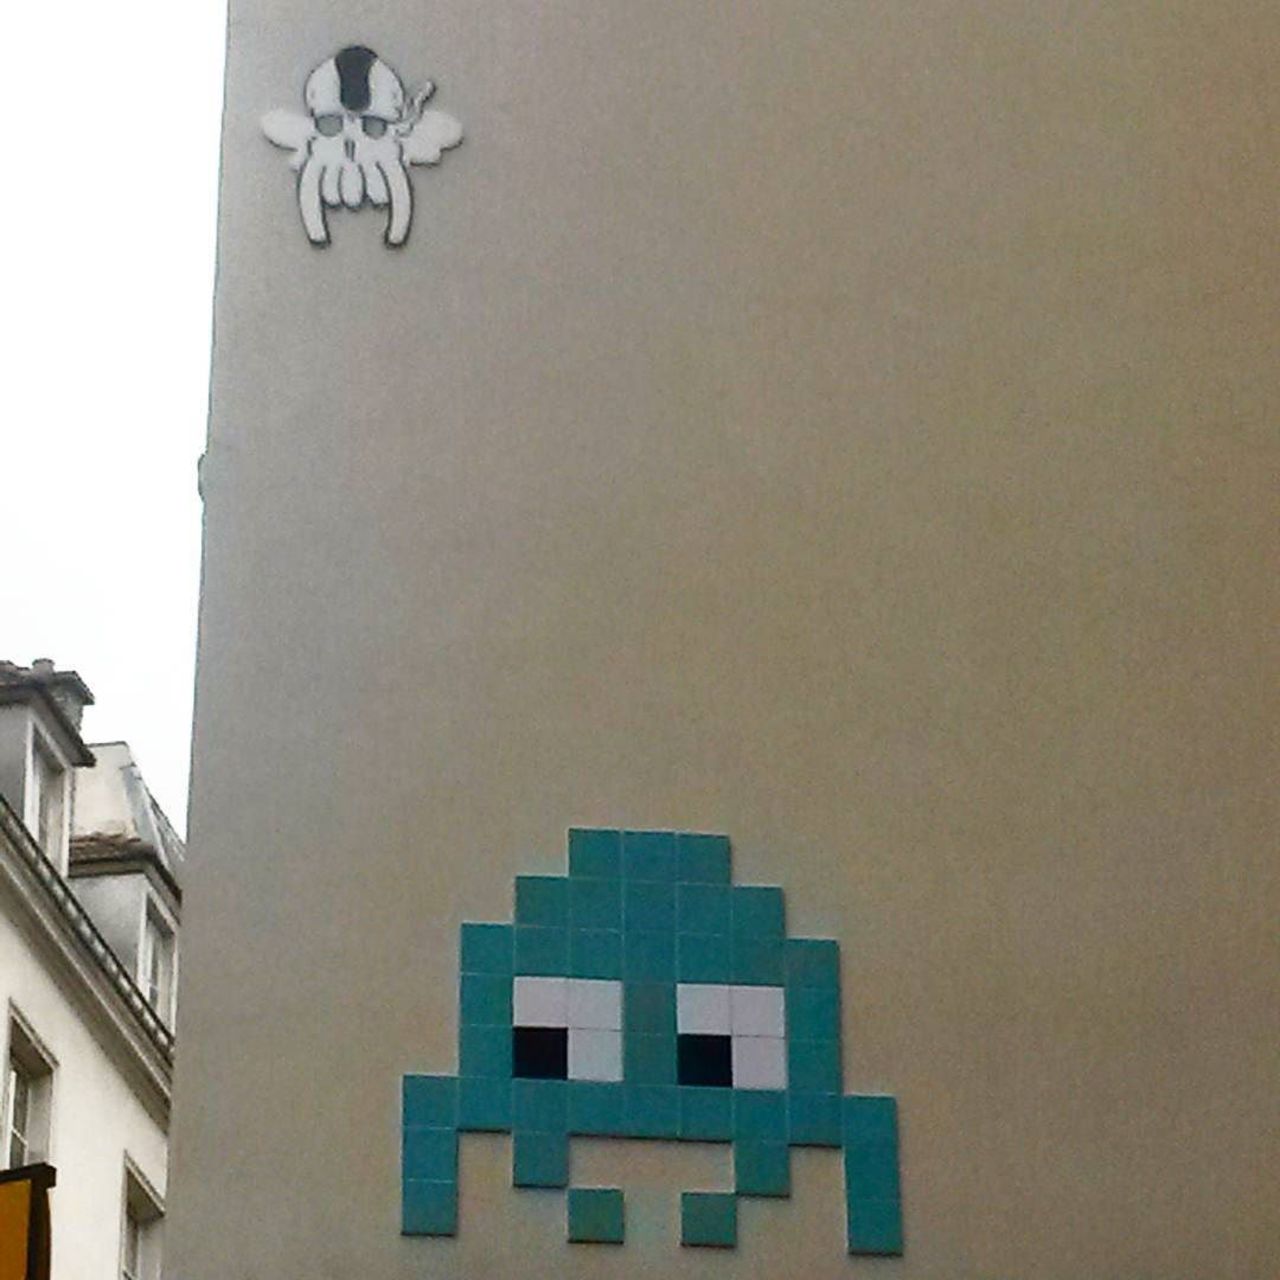 #Paris #graffiti photo by @princessepepett http://ift.tt/1MZUVl4 #StreetArt https://t.co/PRvxsmhJ6T